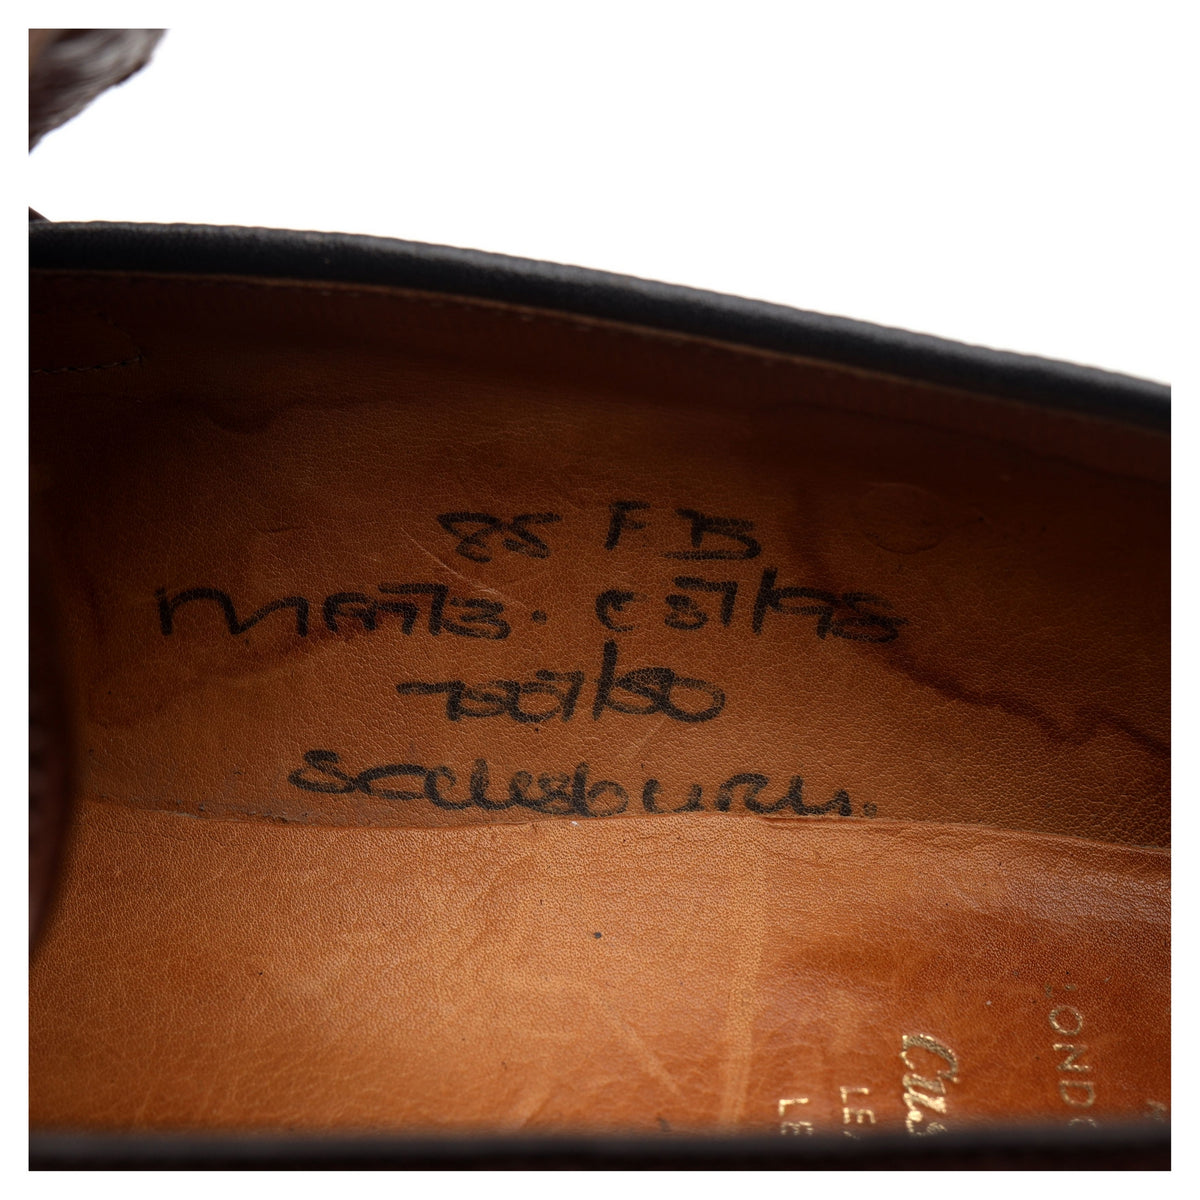 &#39;Salisbury&#39; Brown Leather Loafers UK 8.5 F